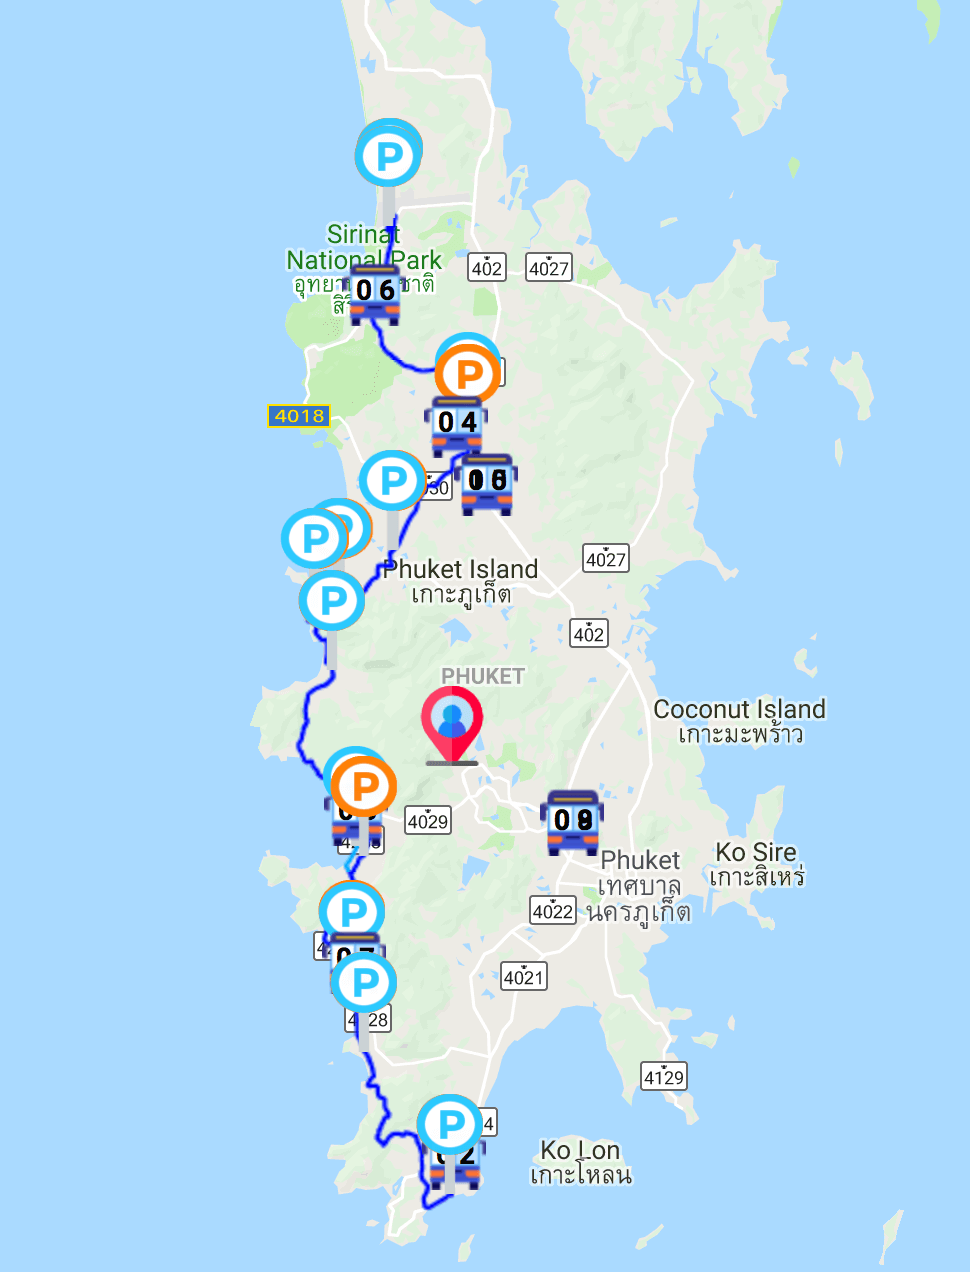 Phuket Smart Bus Route